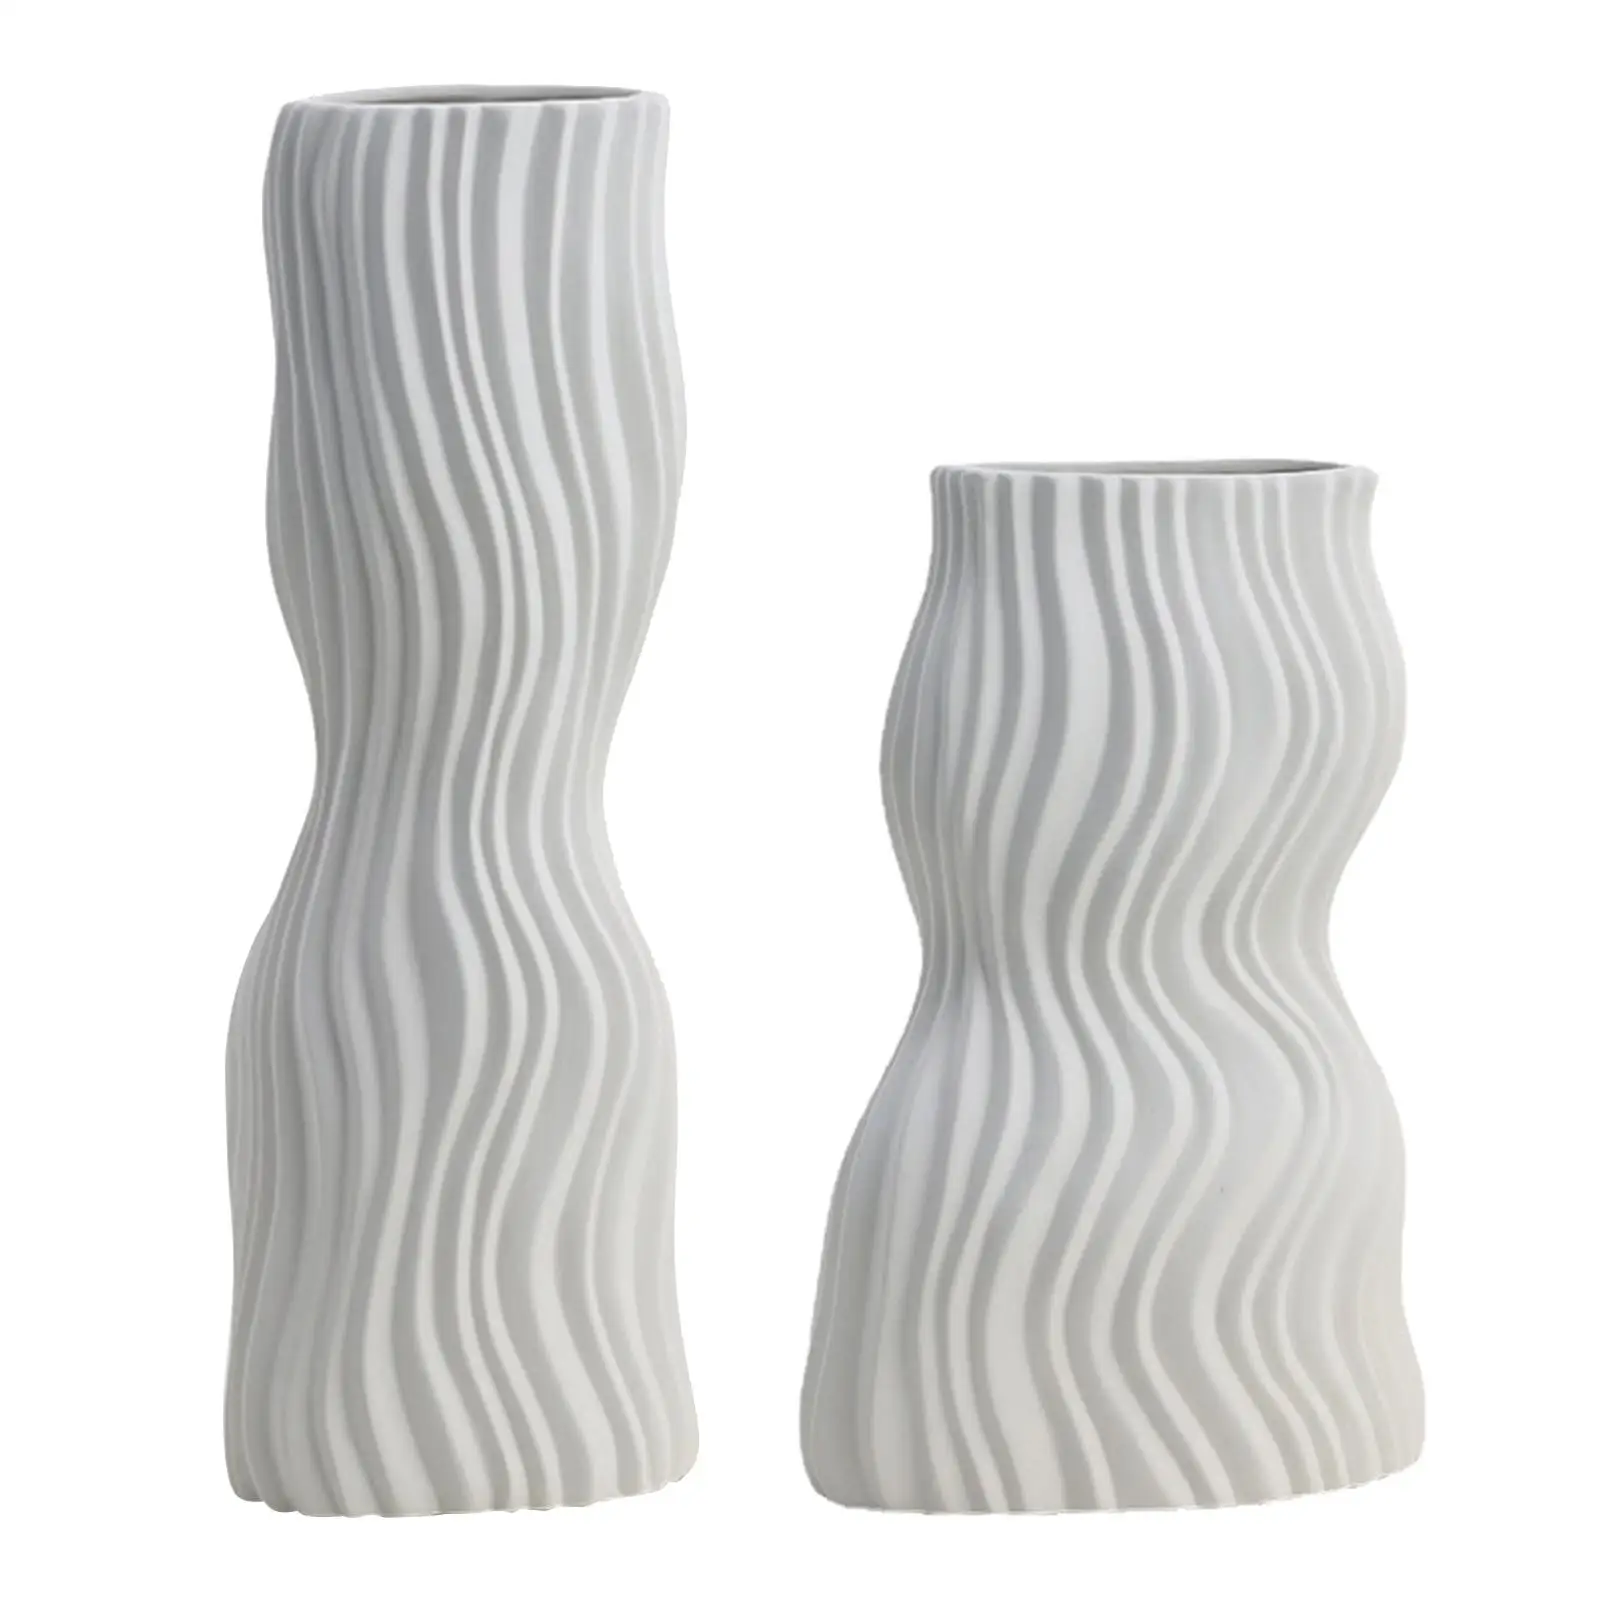 Water Pleated Ceramic Flower Vase Simple Modern Geometric Flower Arrangement Vase for Home Party Decor